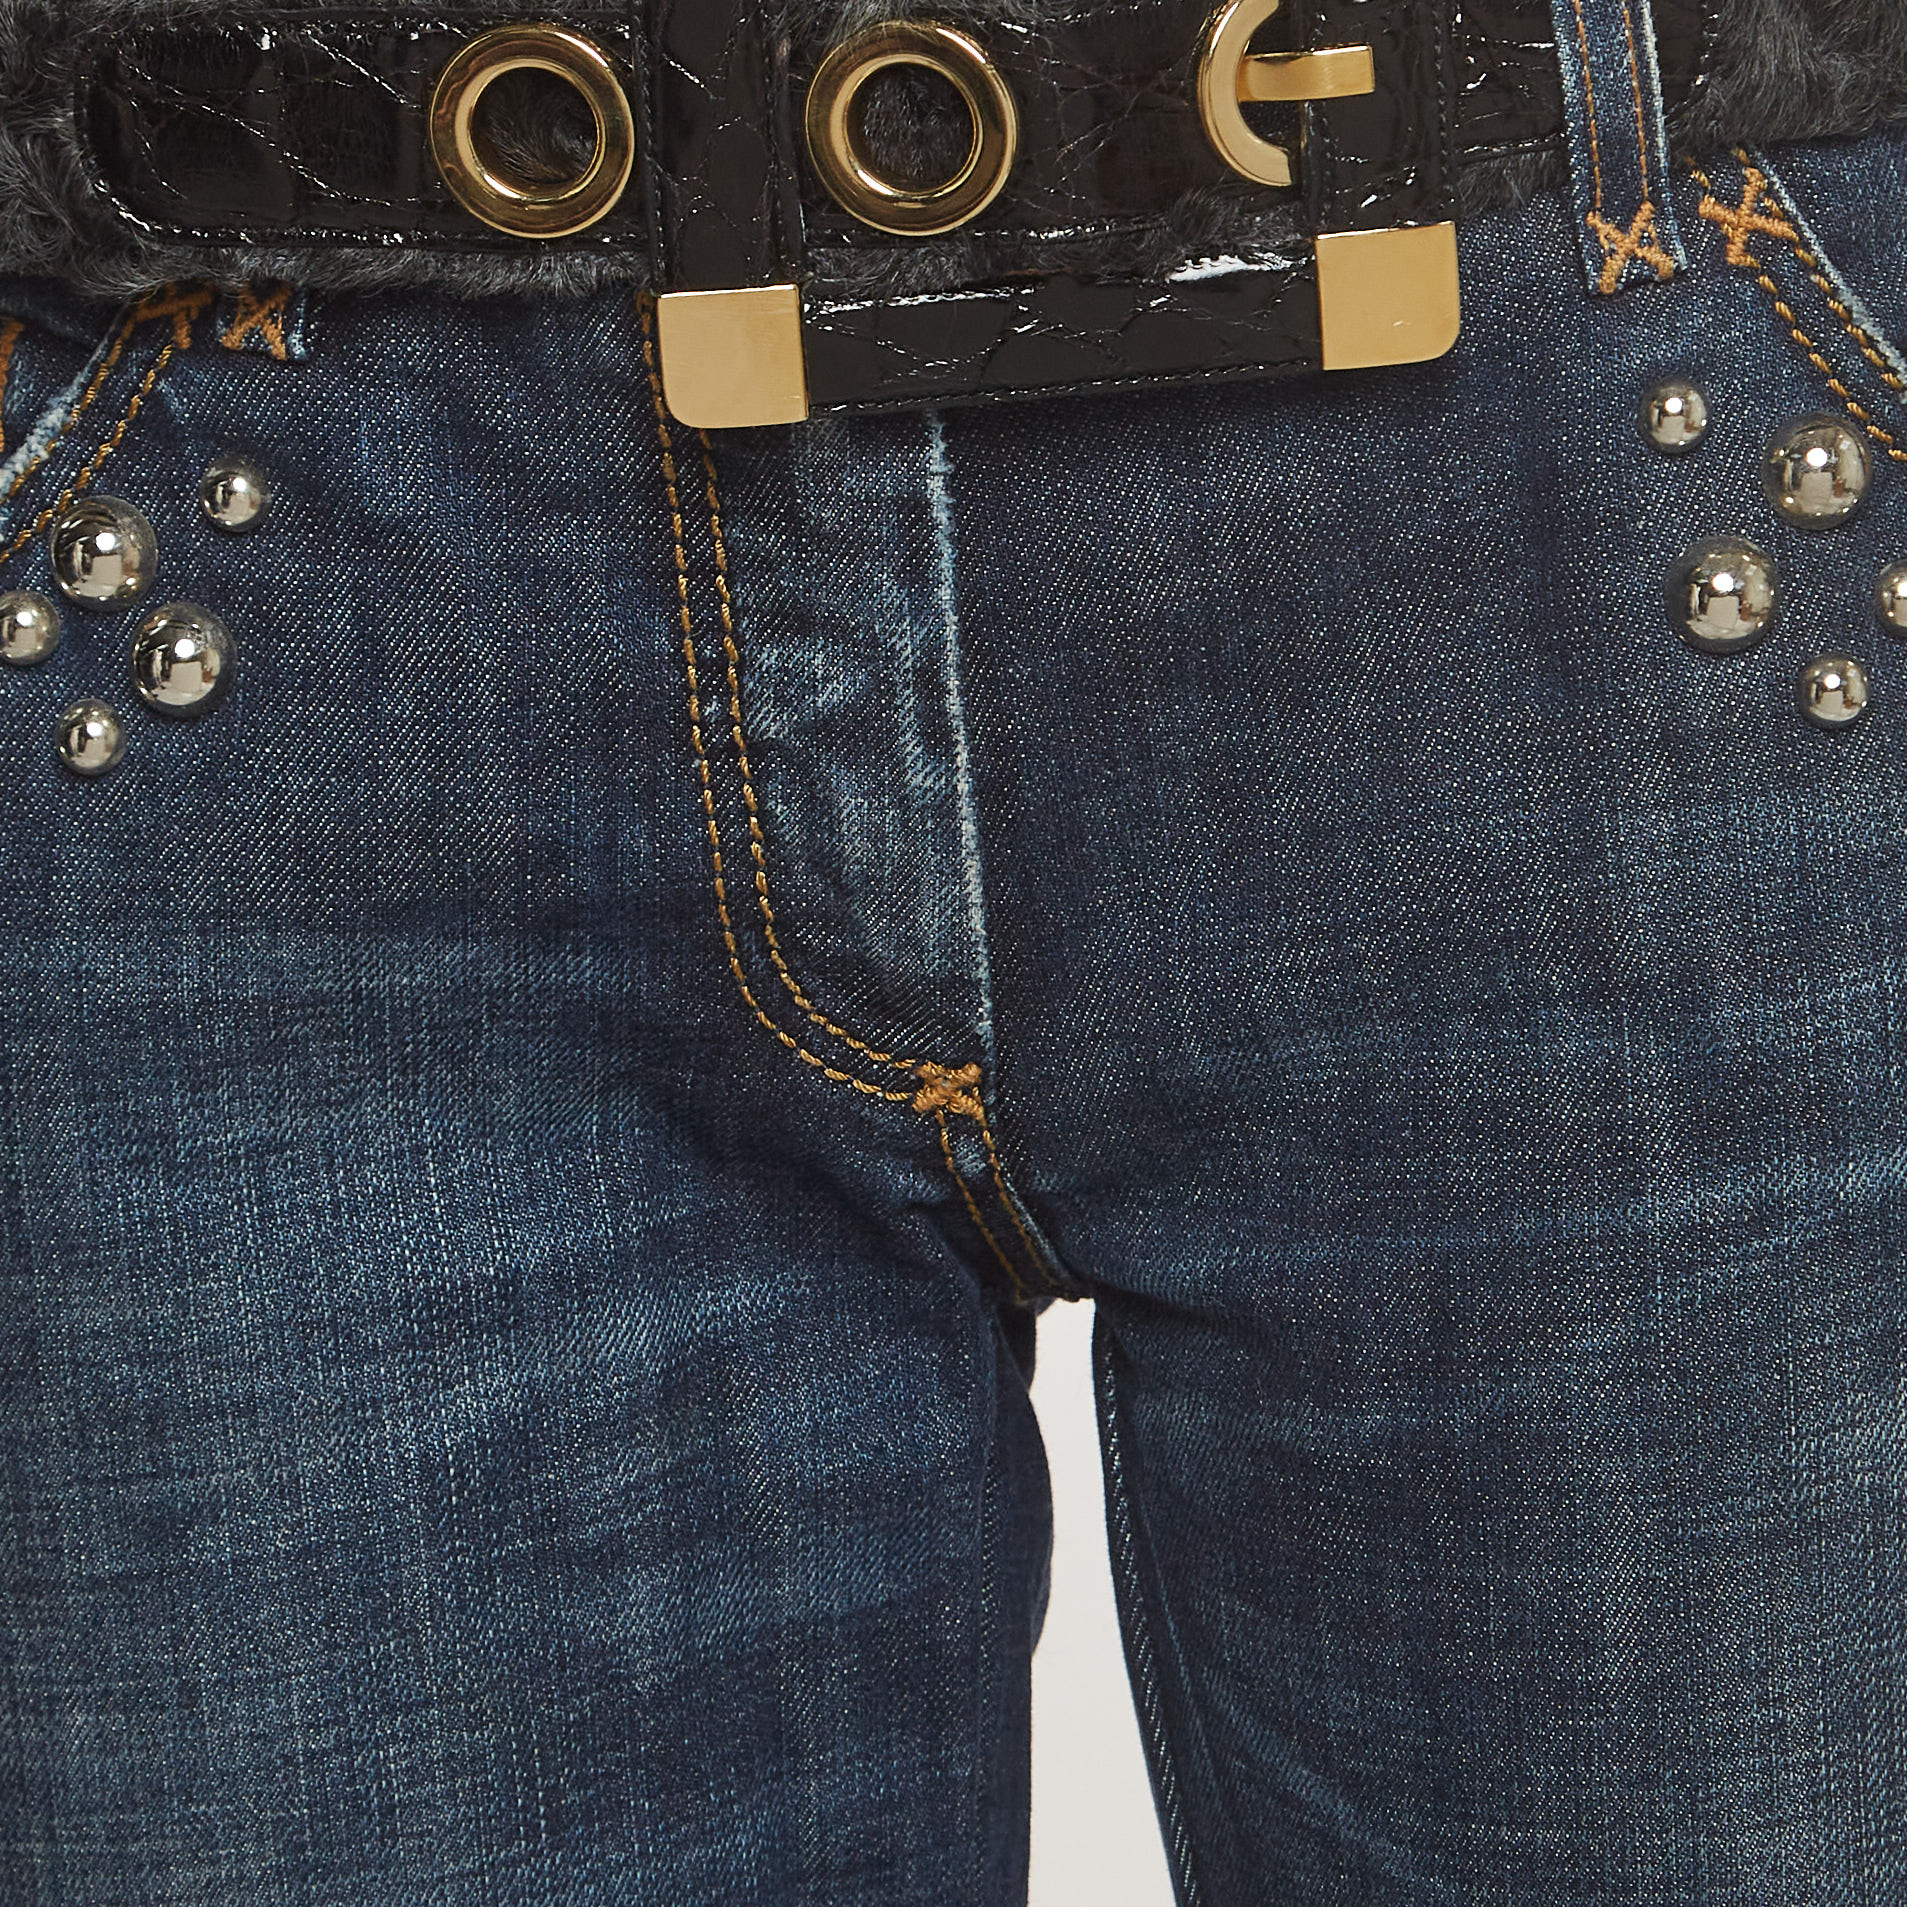 Dolce & Gabbana Blue Denim And Fur Studded Detail Jeans M Waist 34''